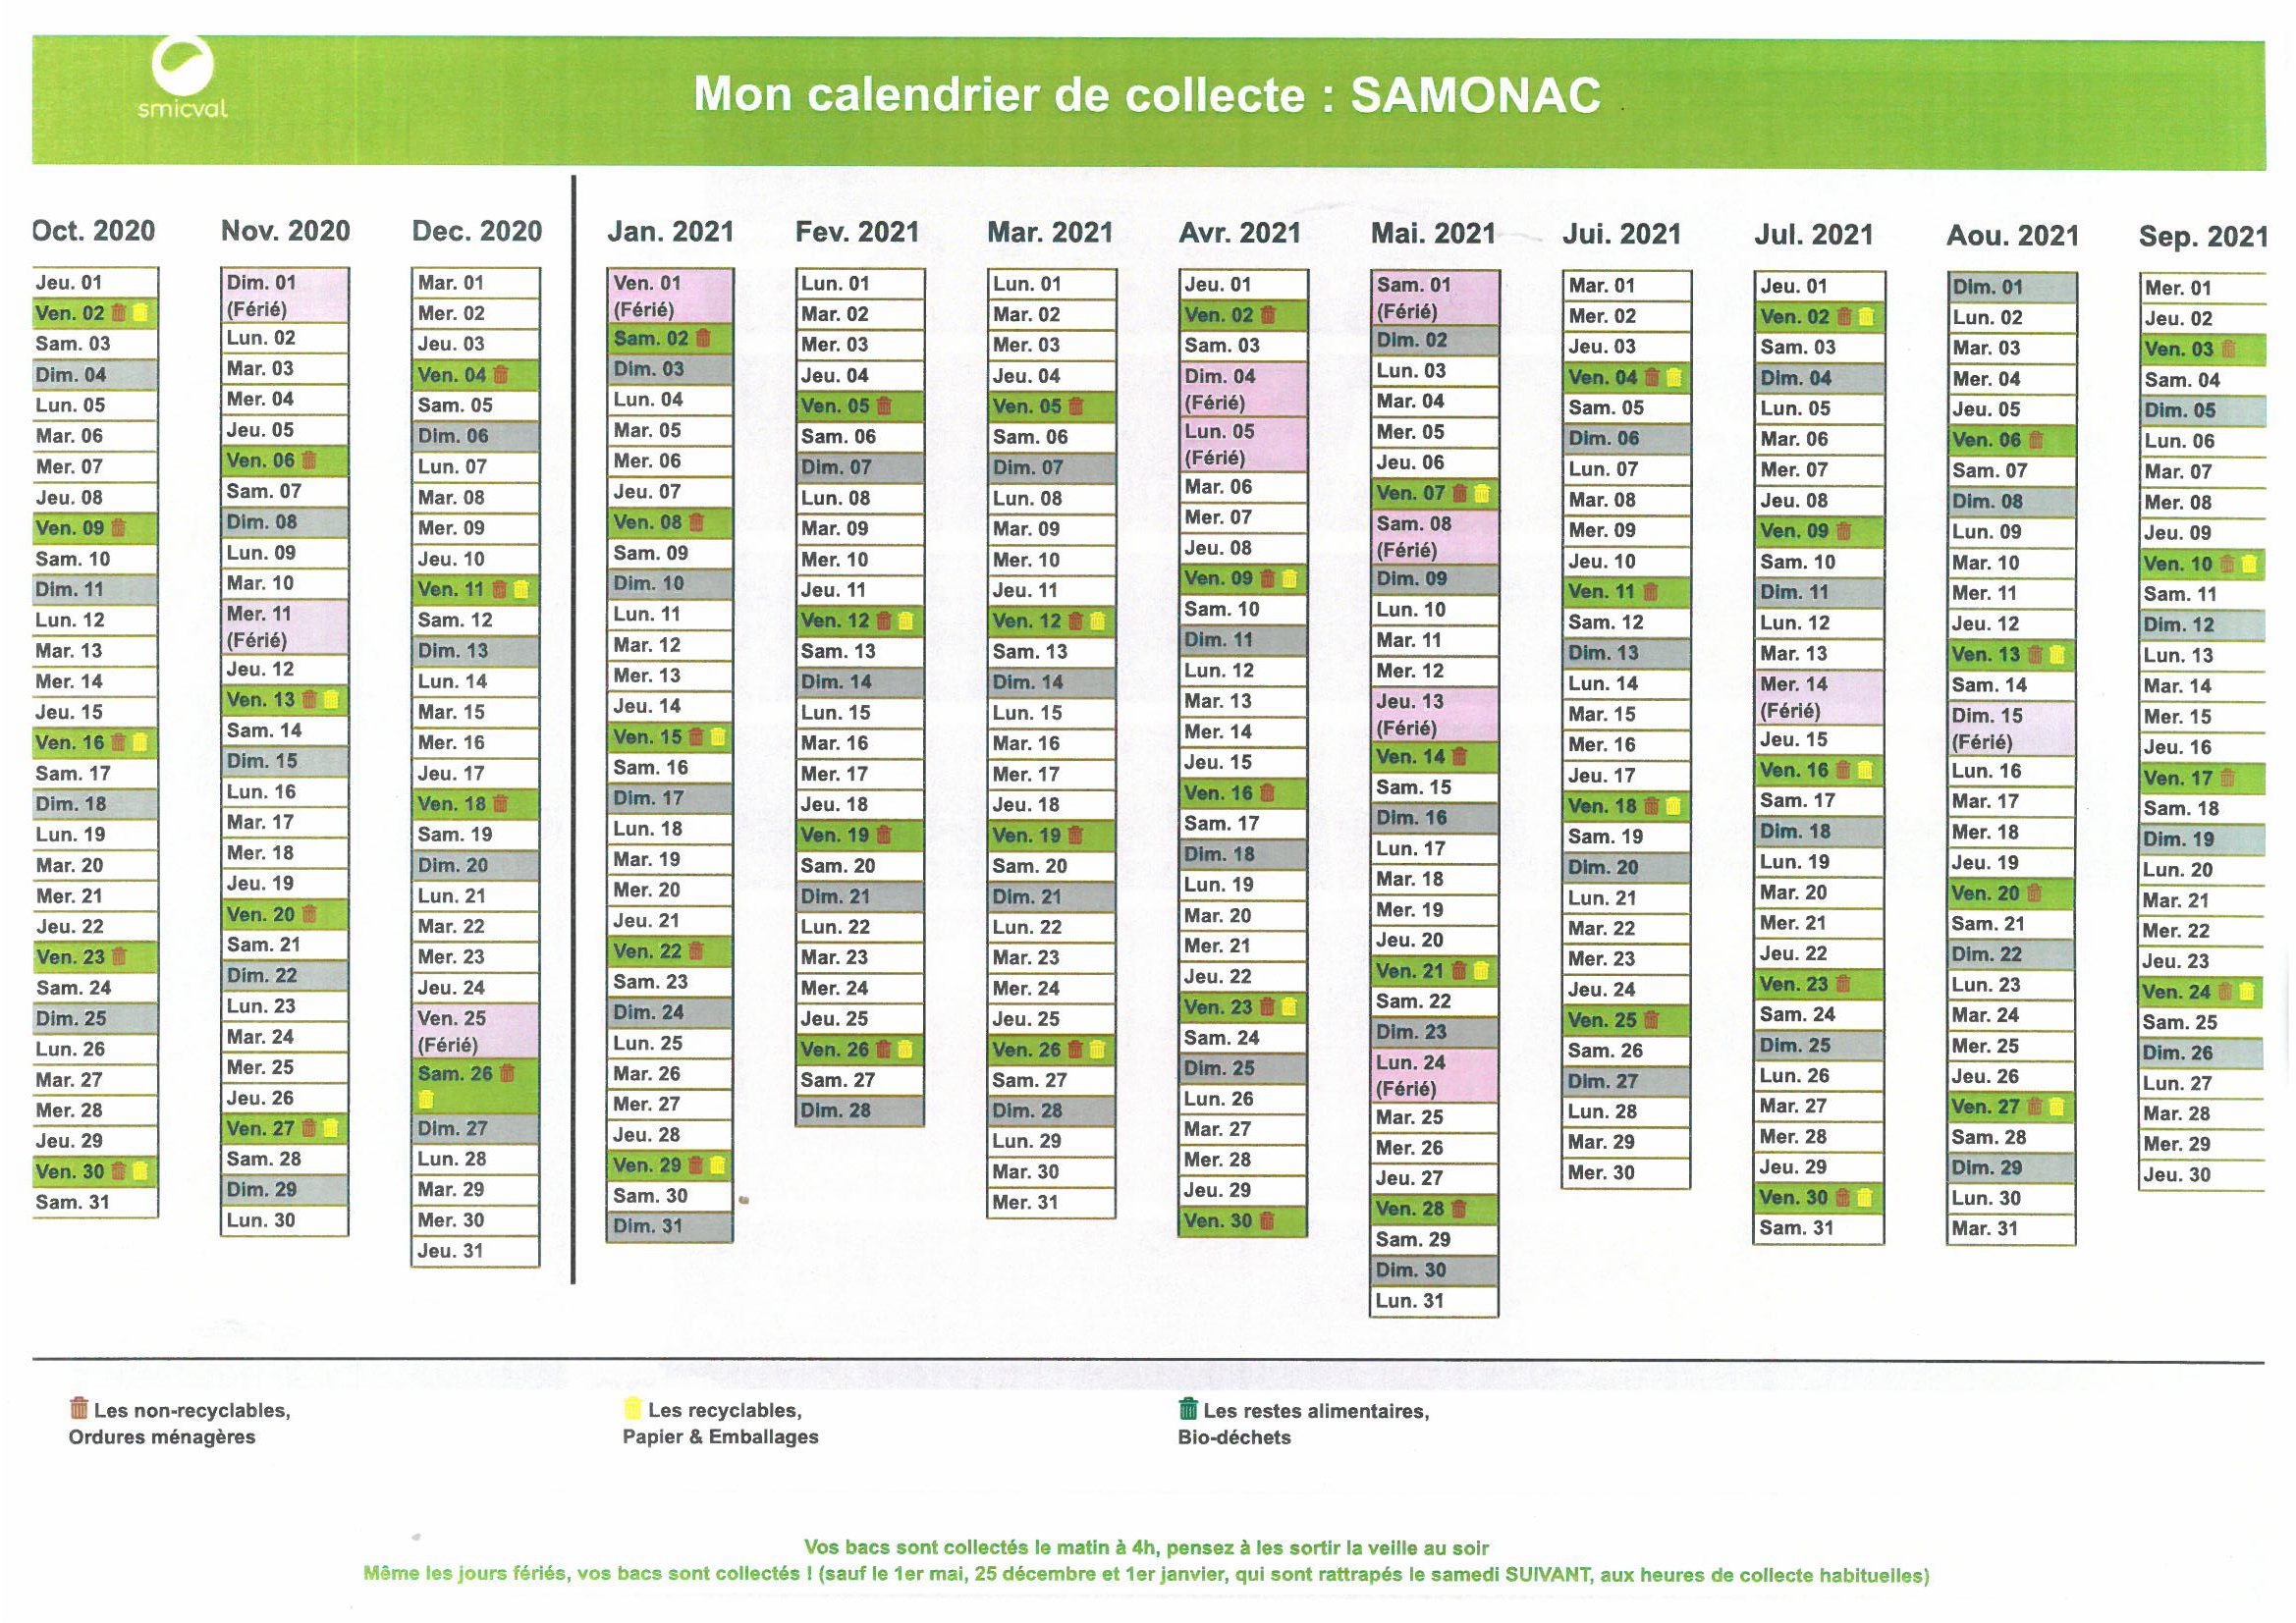 Smicval Calendrier De Collecte 2021 Calendrier SMICVAL 2020/2021   Samonac